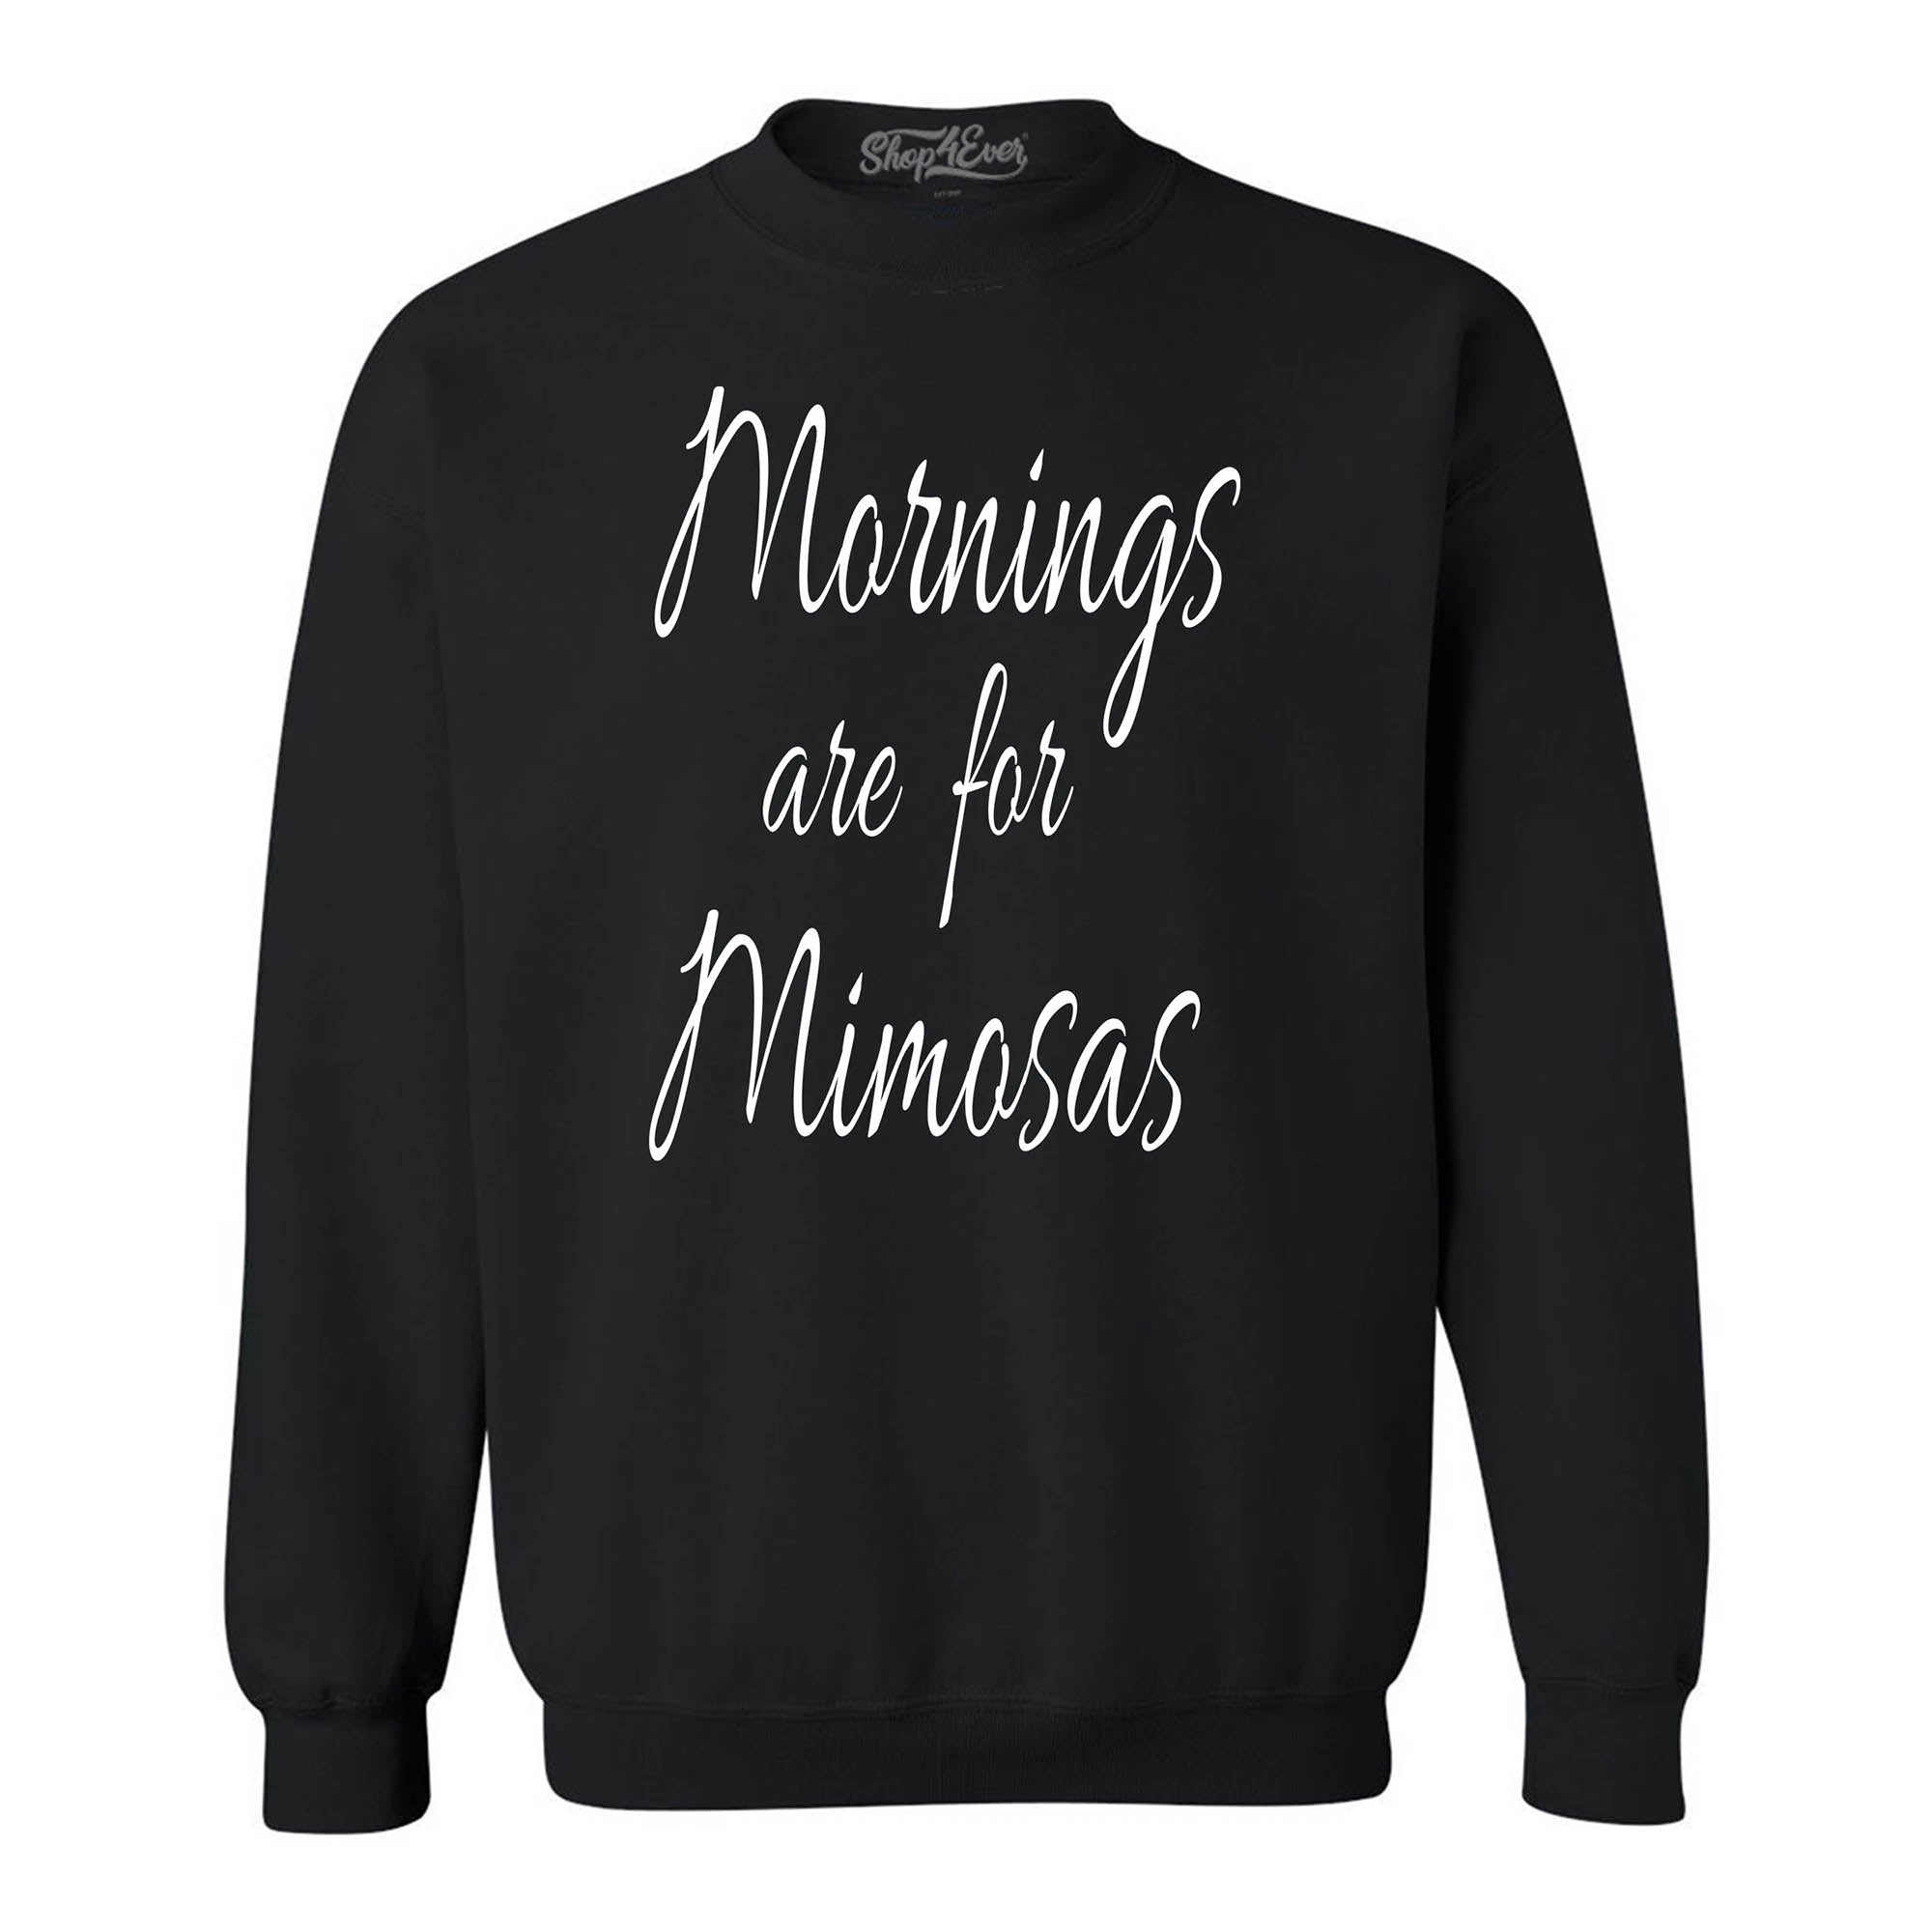 Mornings are for Mimosas Crewnecks Drinking Sweatshirts